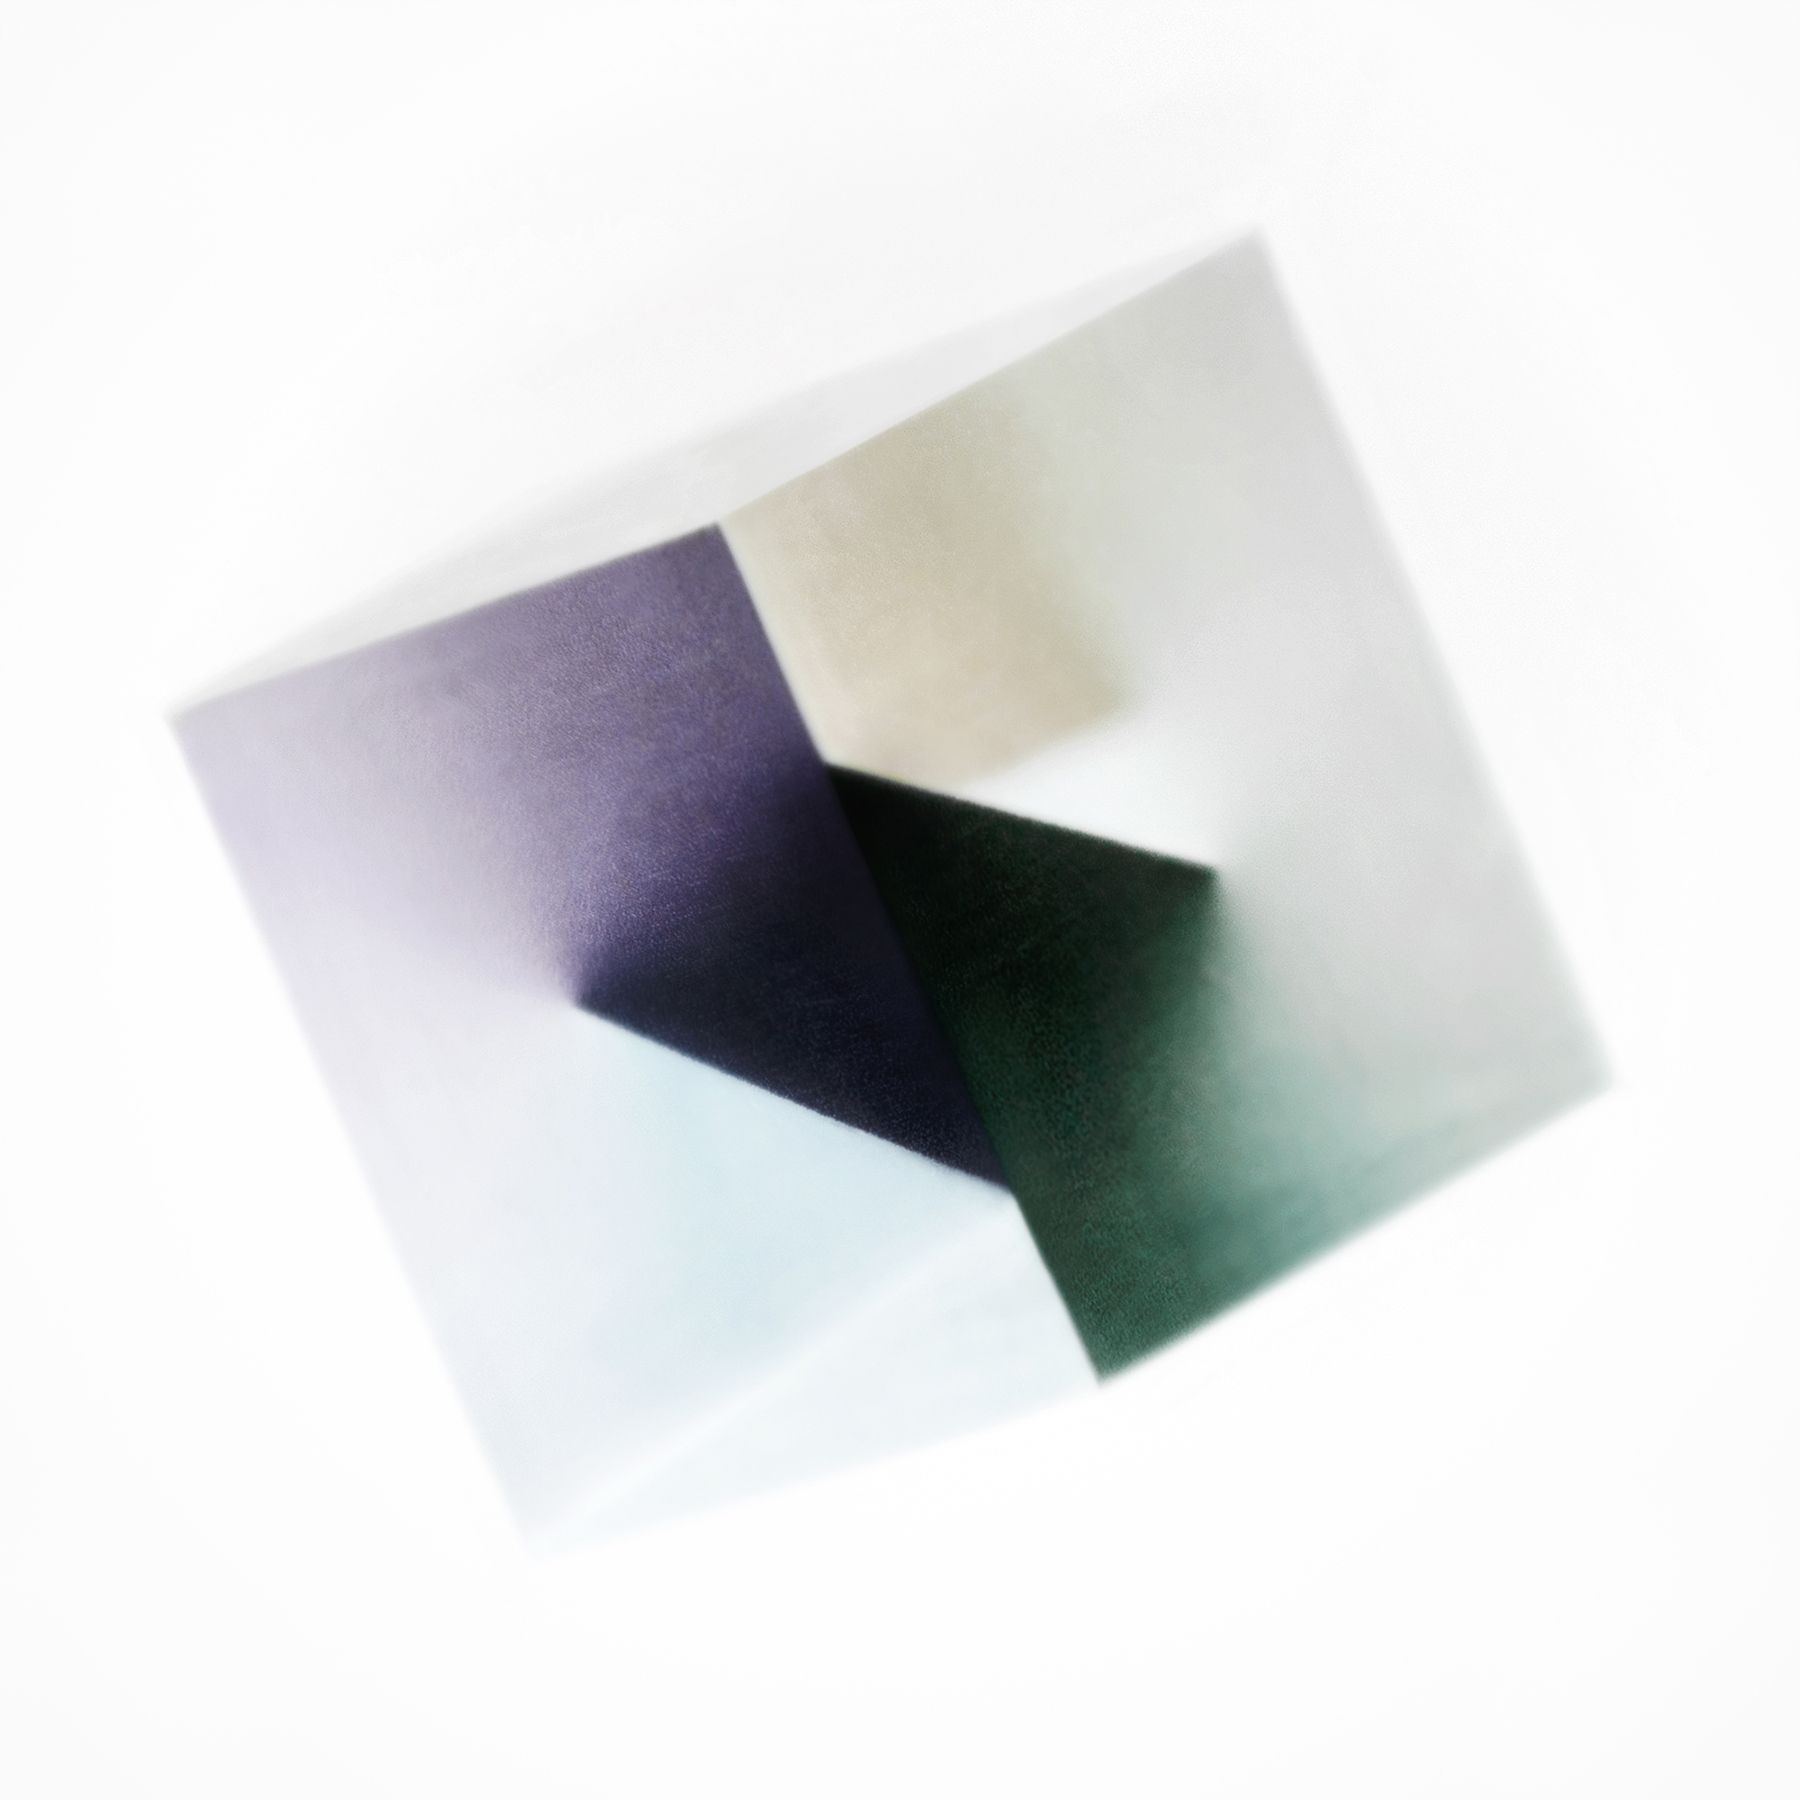 Crystal Lake2_Archival pigment print_90x90cm_2014